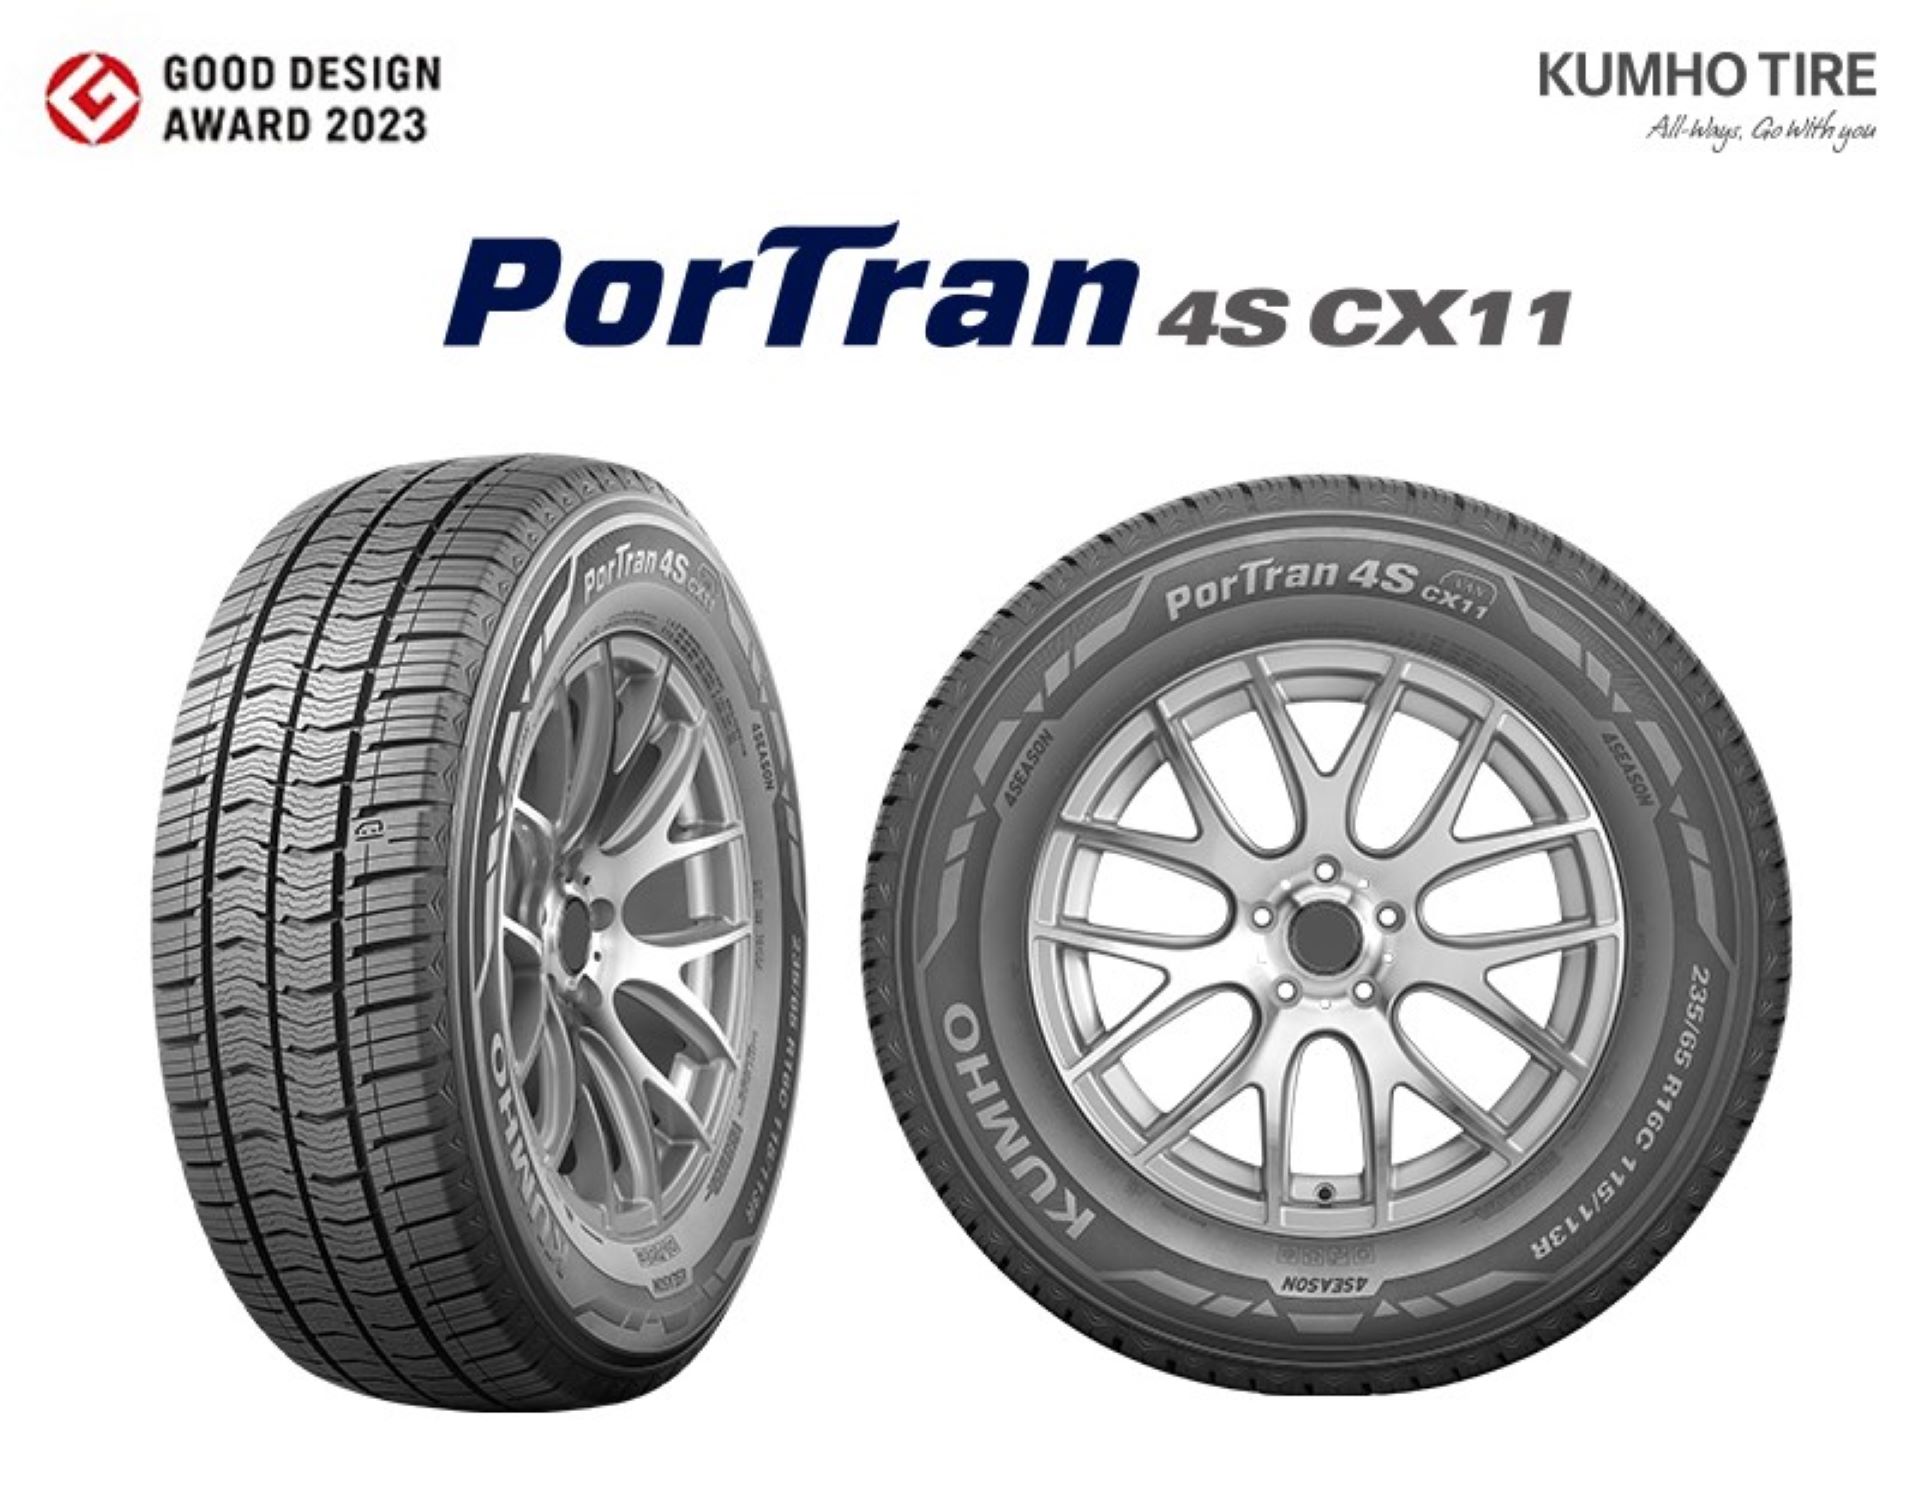 Kumho Tire wins the Good Design Award (Japan) 2023